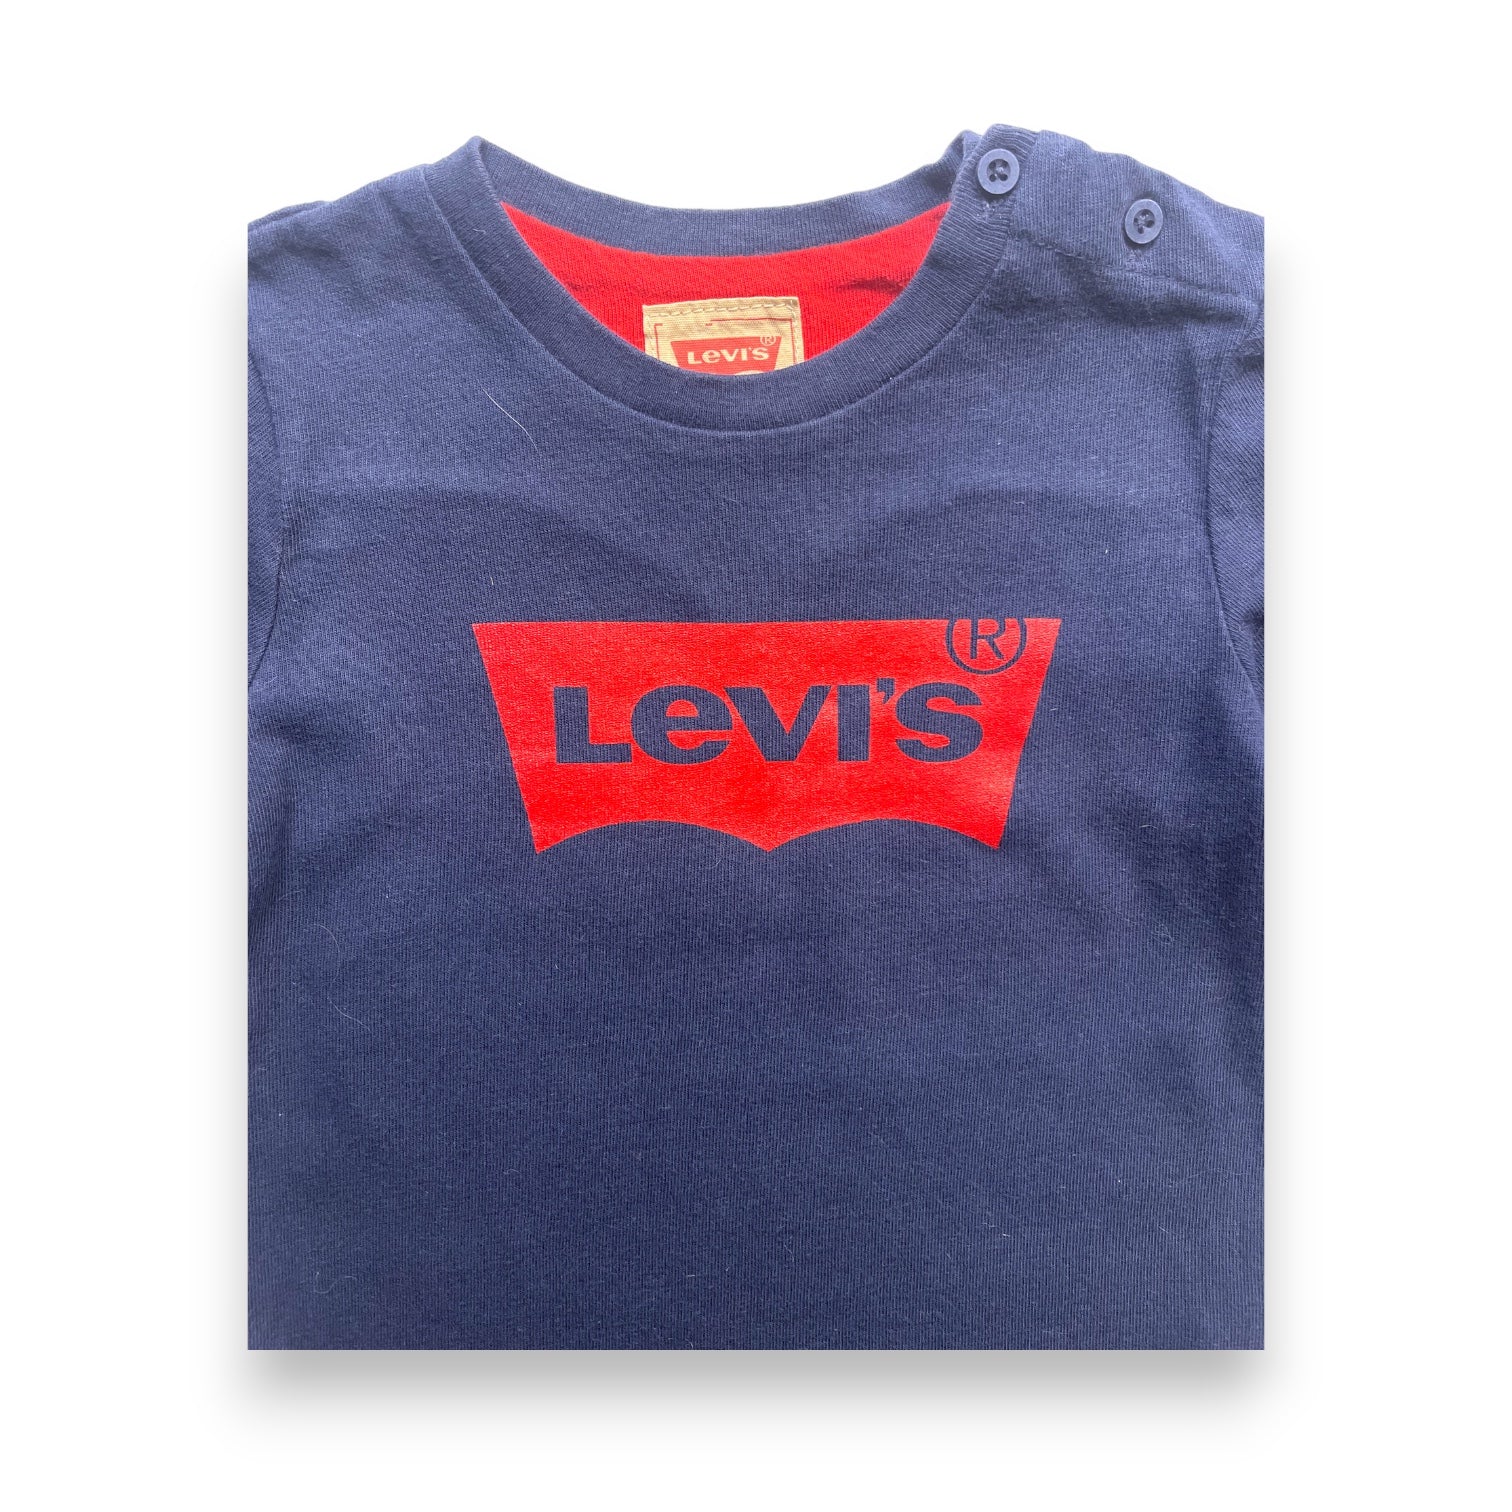 LEVI’S - Tshirt  bleu marine logo rouge - 2 ans